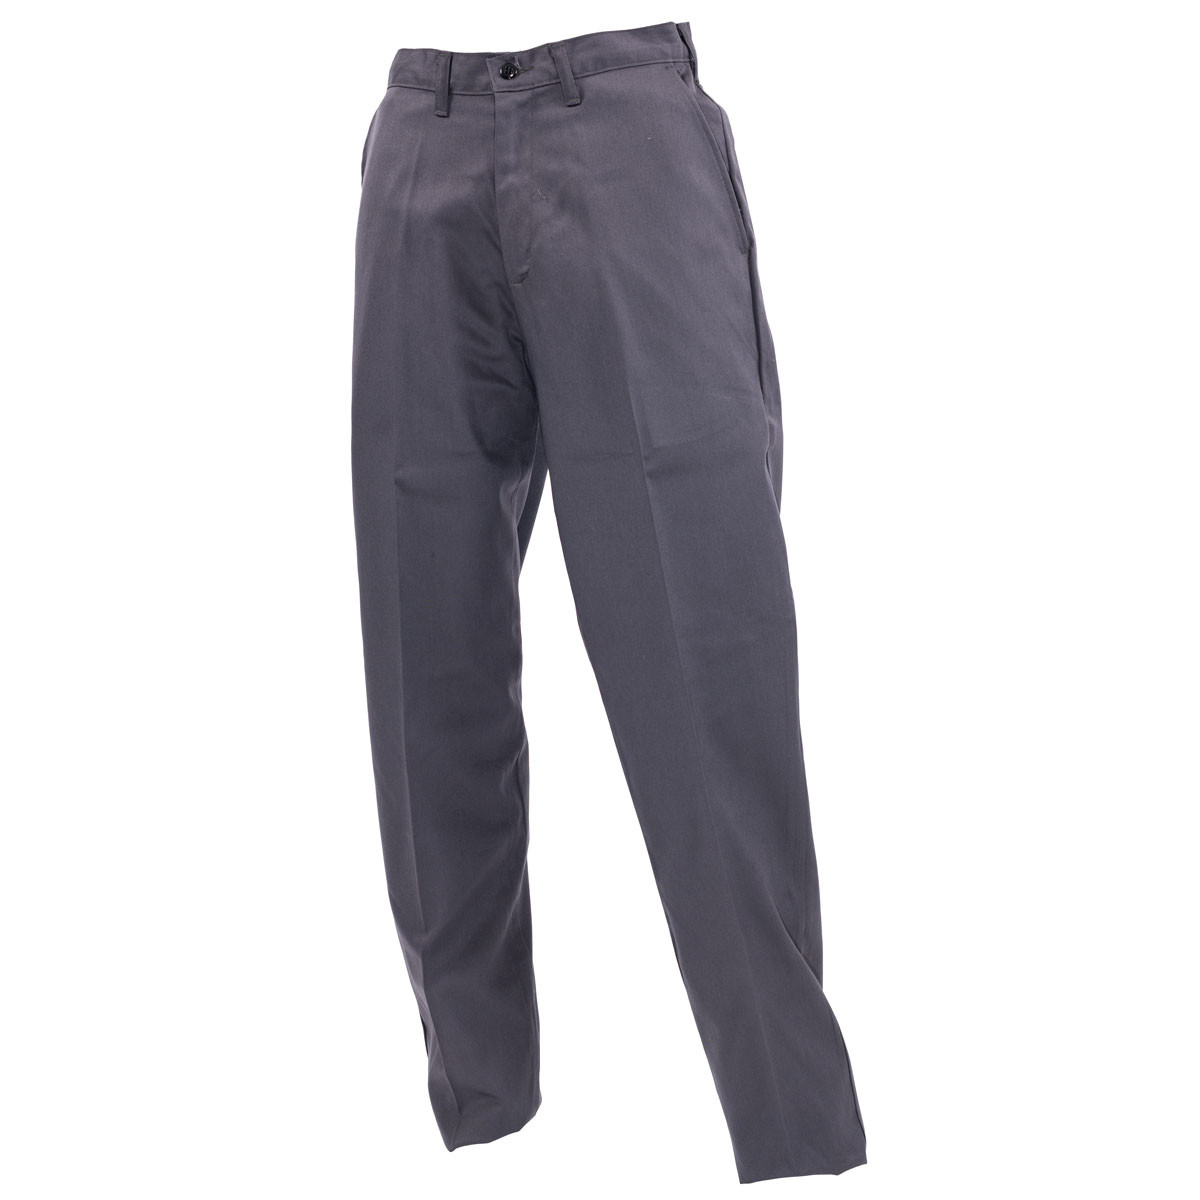 Flame Retardant Pants - Charcoal Grey